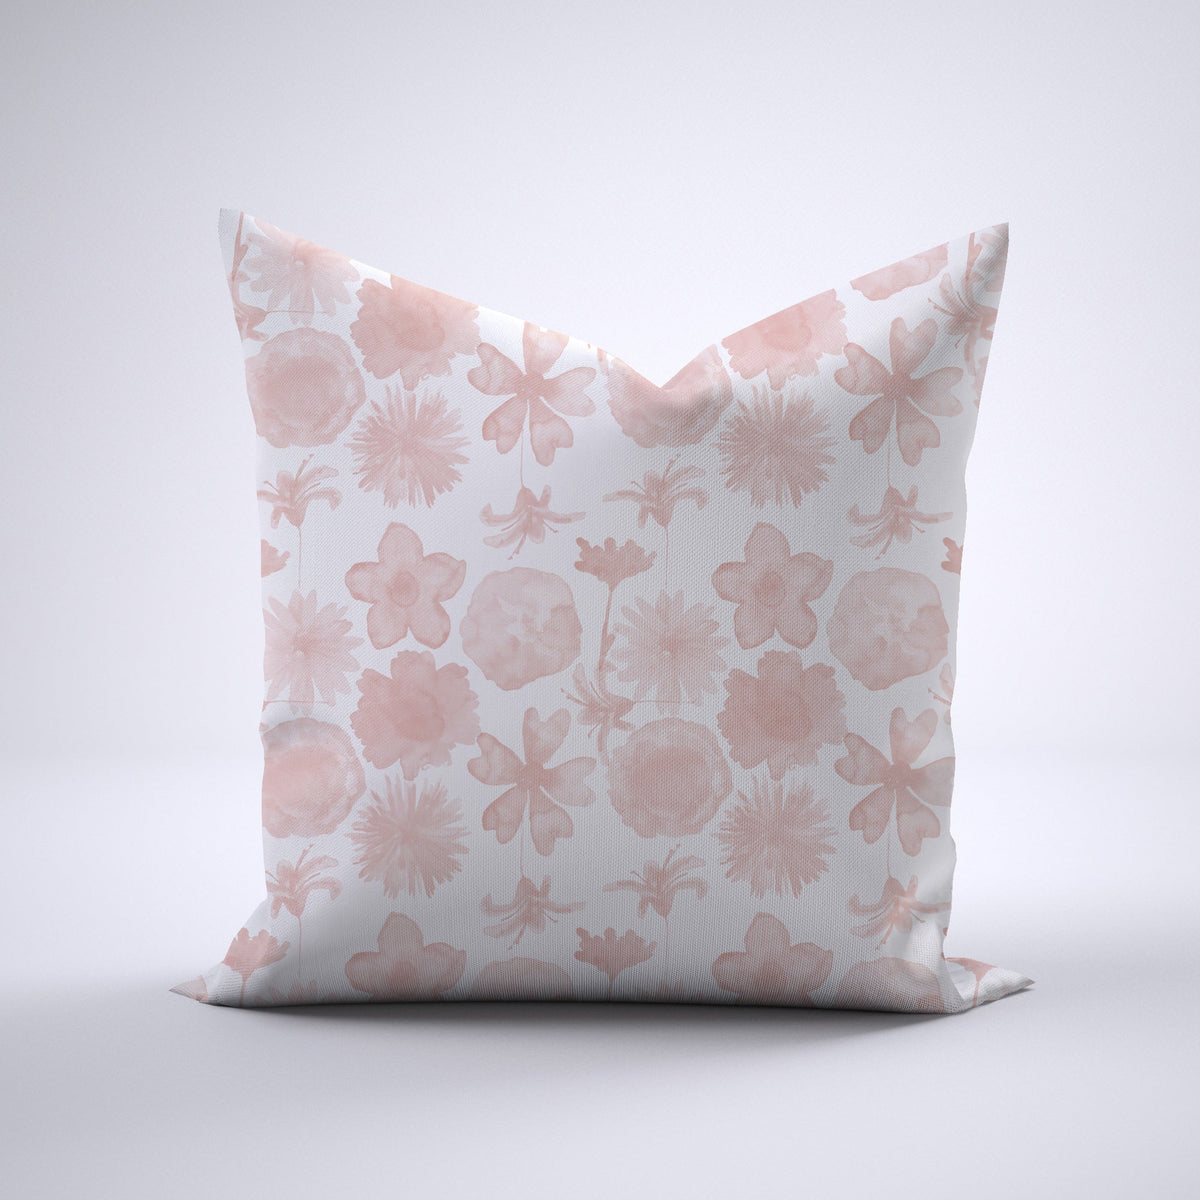 Throw Pillow - Petals Light Pink Bedding, Pillows, Throw Pillows MWW 